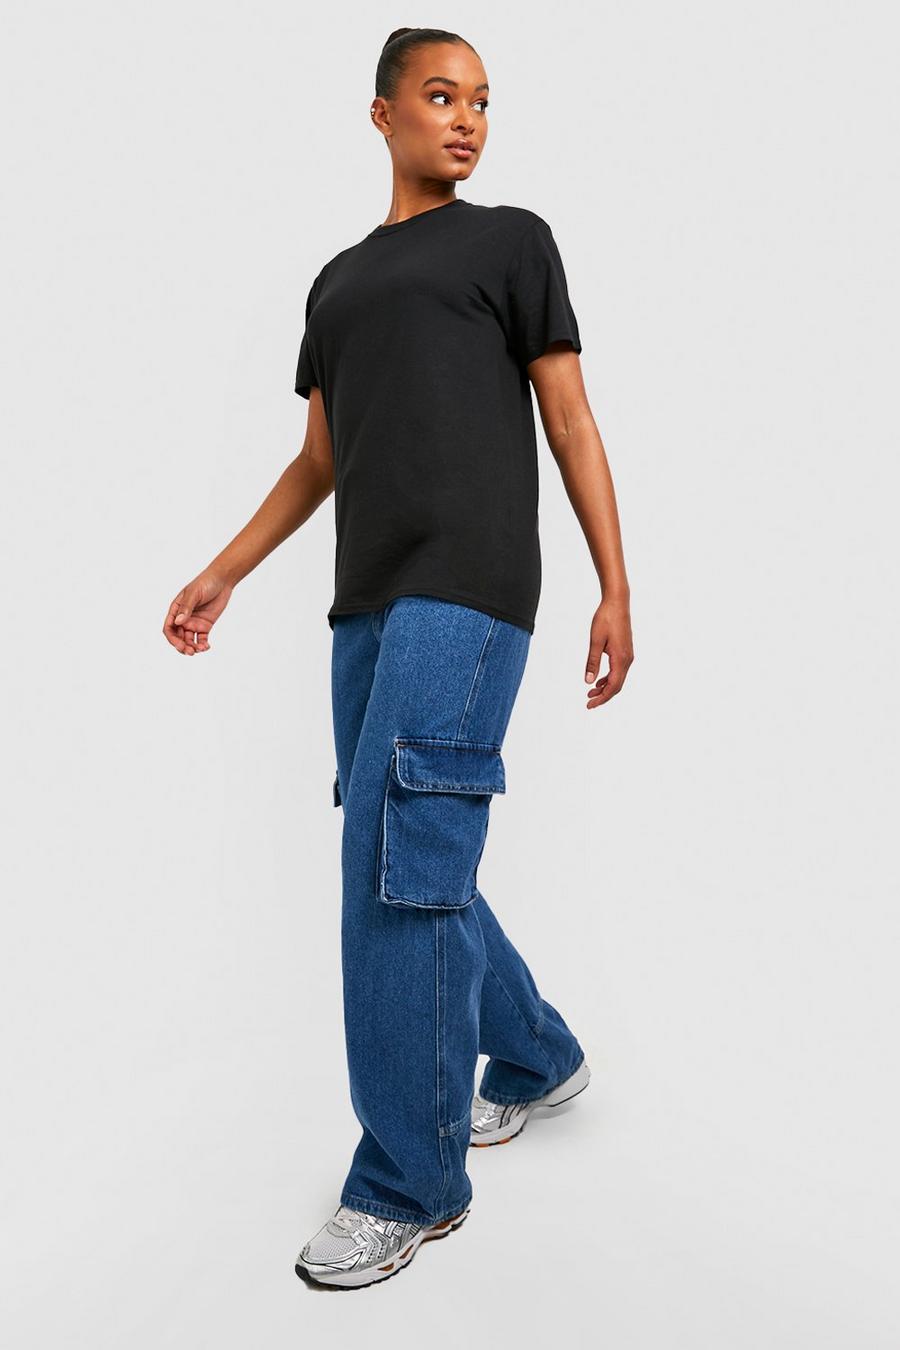 Camiseta Tall de algodón lisa, Black image number 1